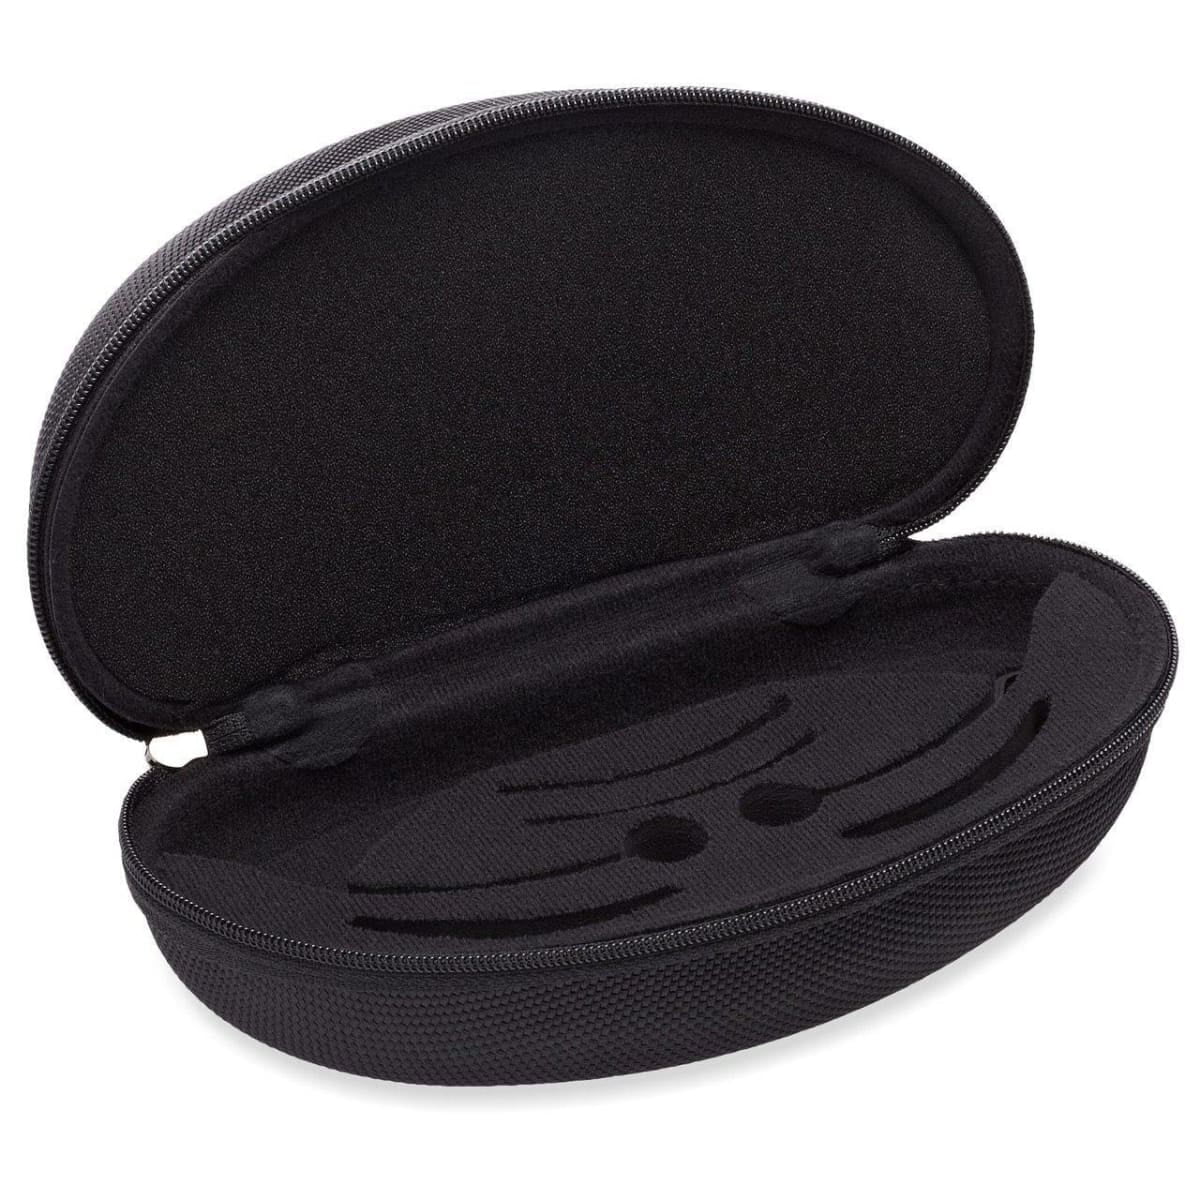 Oakley Half Jacket / Flak Jacket Sport Soft Vault Storage Sunglasses Case -  Black 